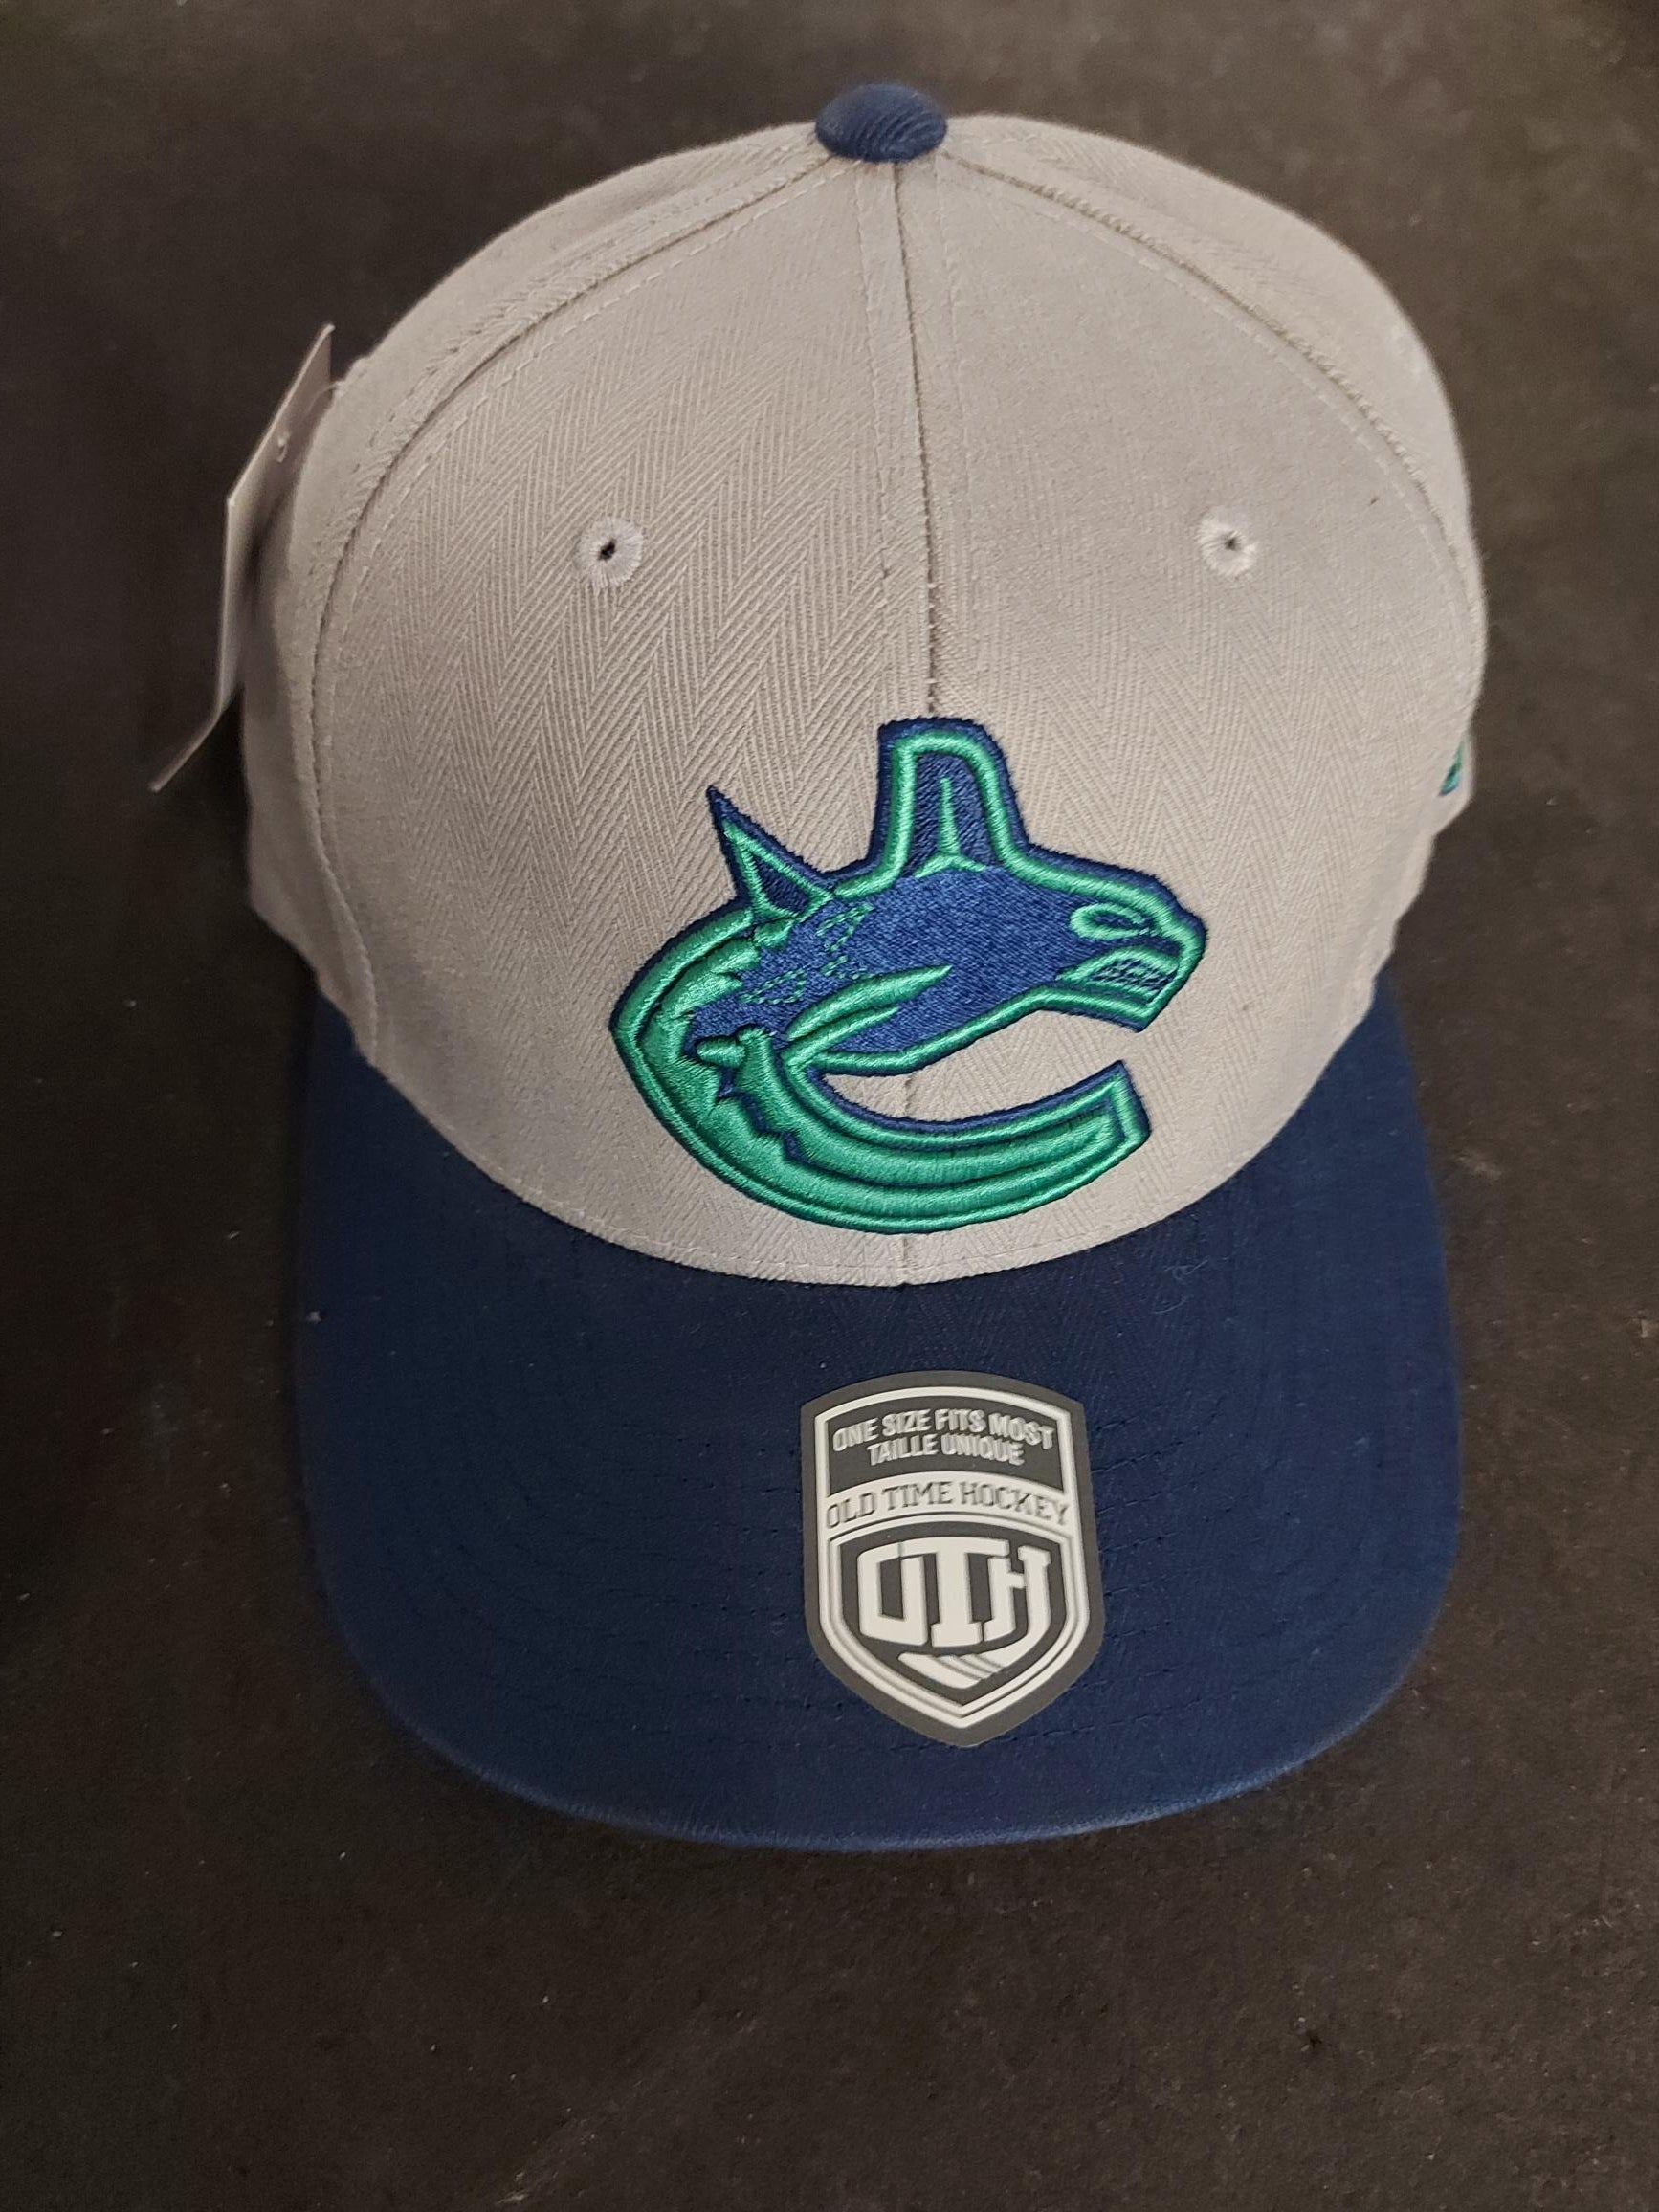 Vancouver Canucks NHL Fan Caps & Hats for sale